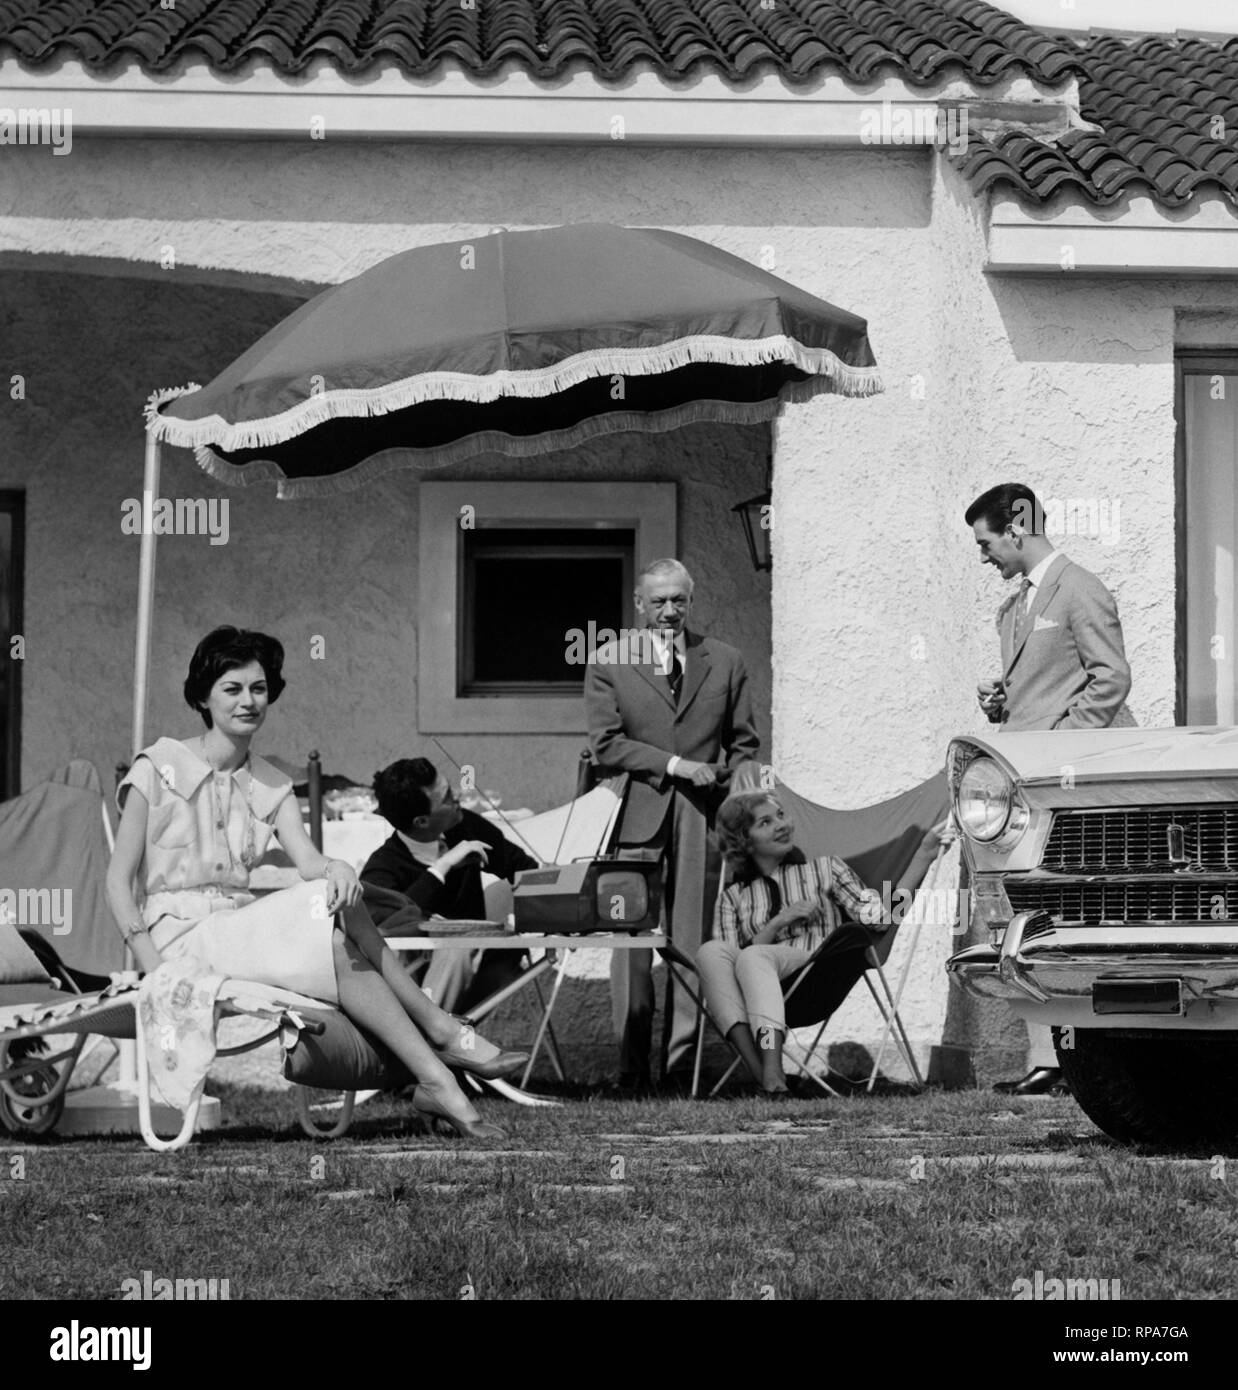 En el jardín de la familia, Fiat 1800, 1959 Foto de stock